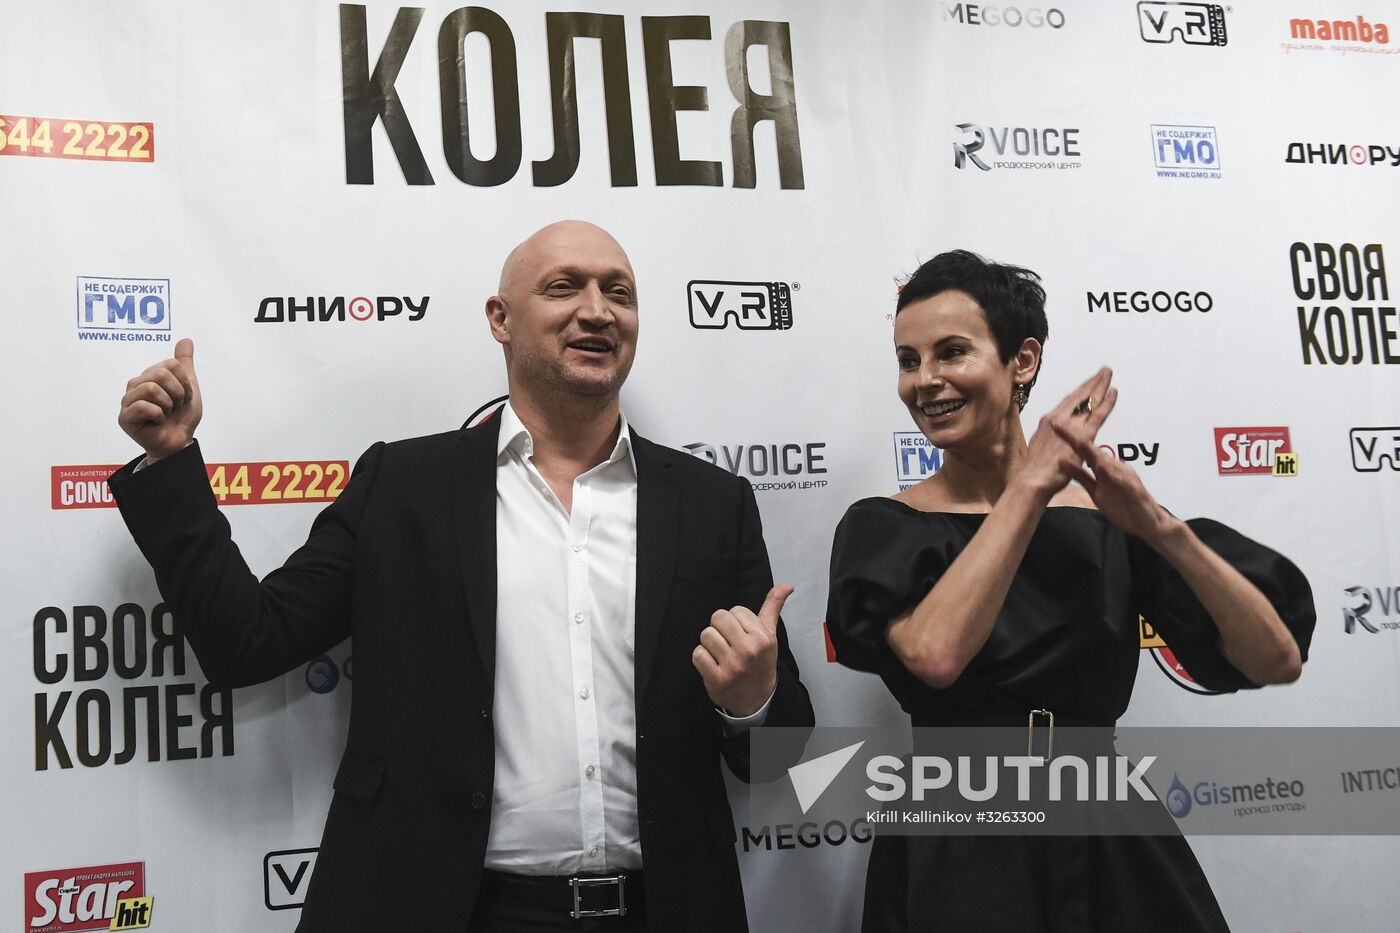 Vladimir Vysotsky's One's Own Track award ceremony